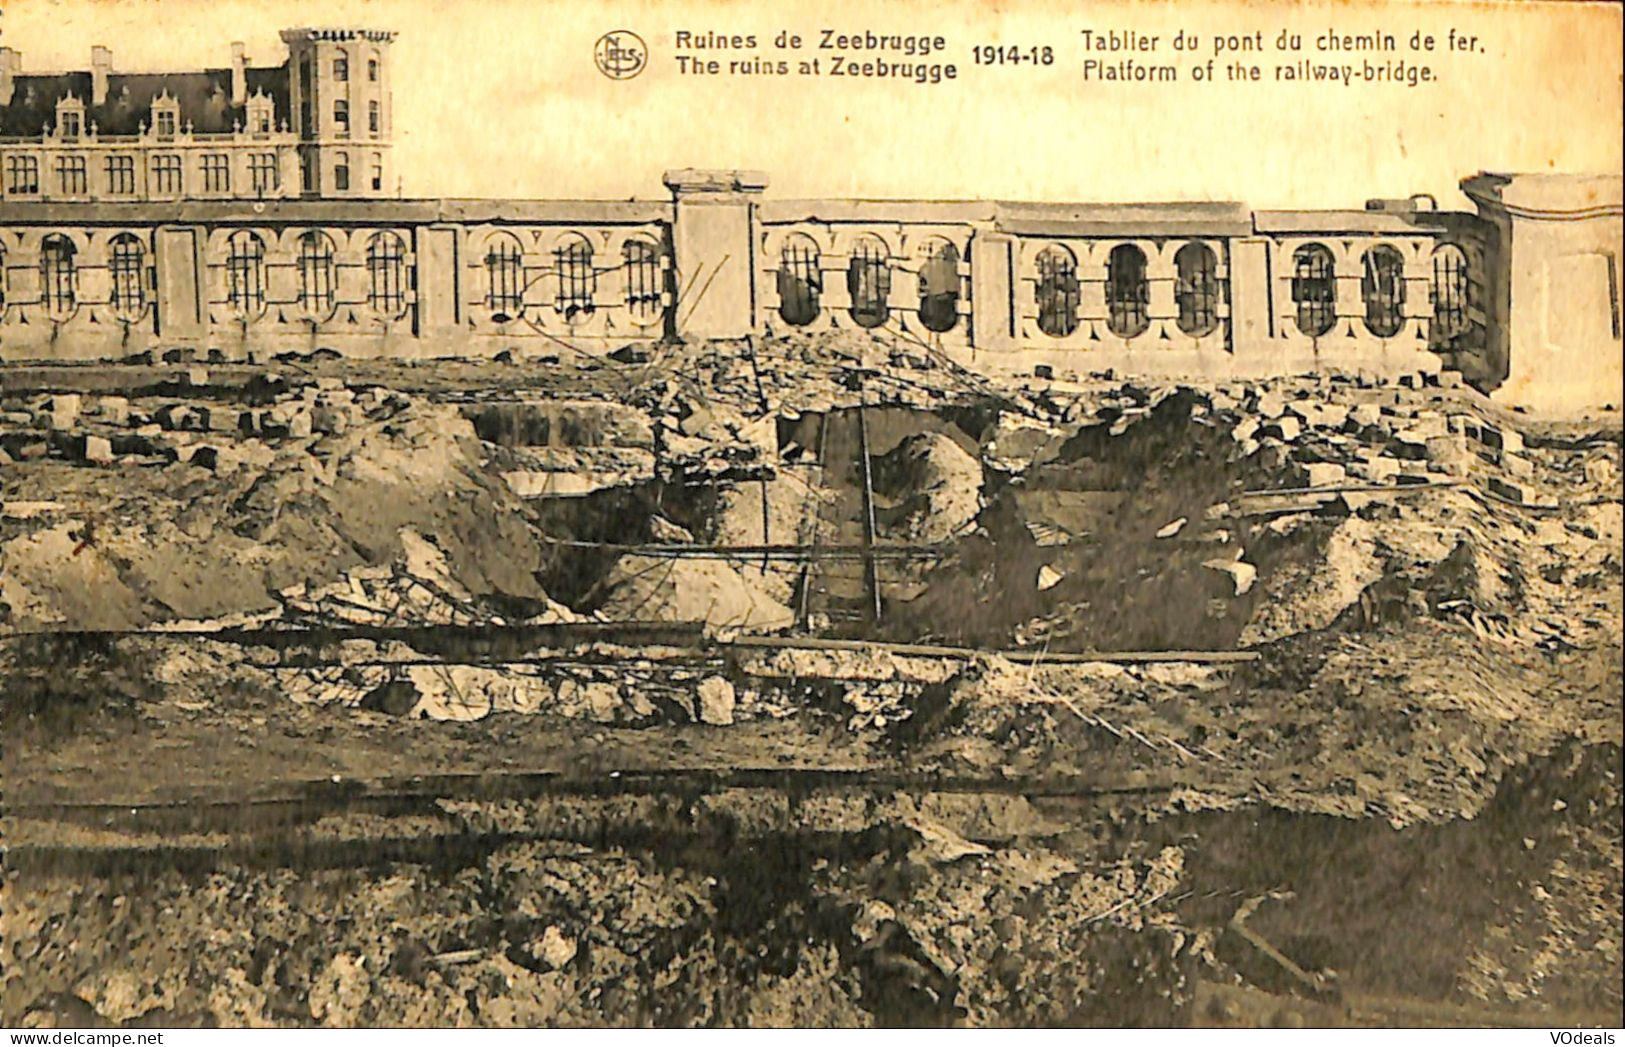 Belgique - Flandre Occidentale - Zeebrugge - Ruines De Zeebrugge - 1914-18 - Tablier Du Pont Du Chemin De Fer - Zeebrugge